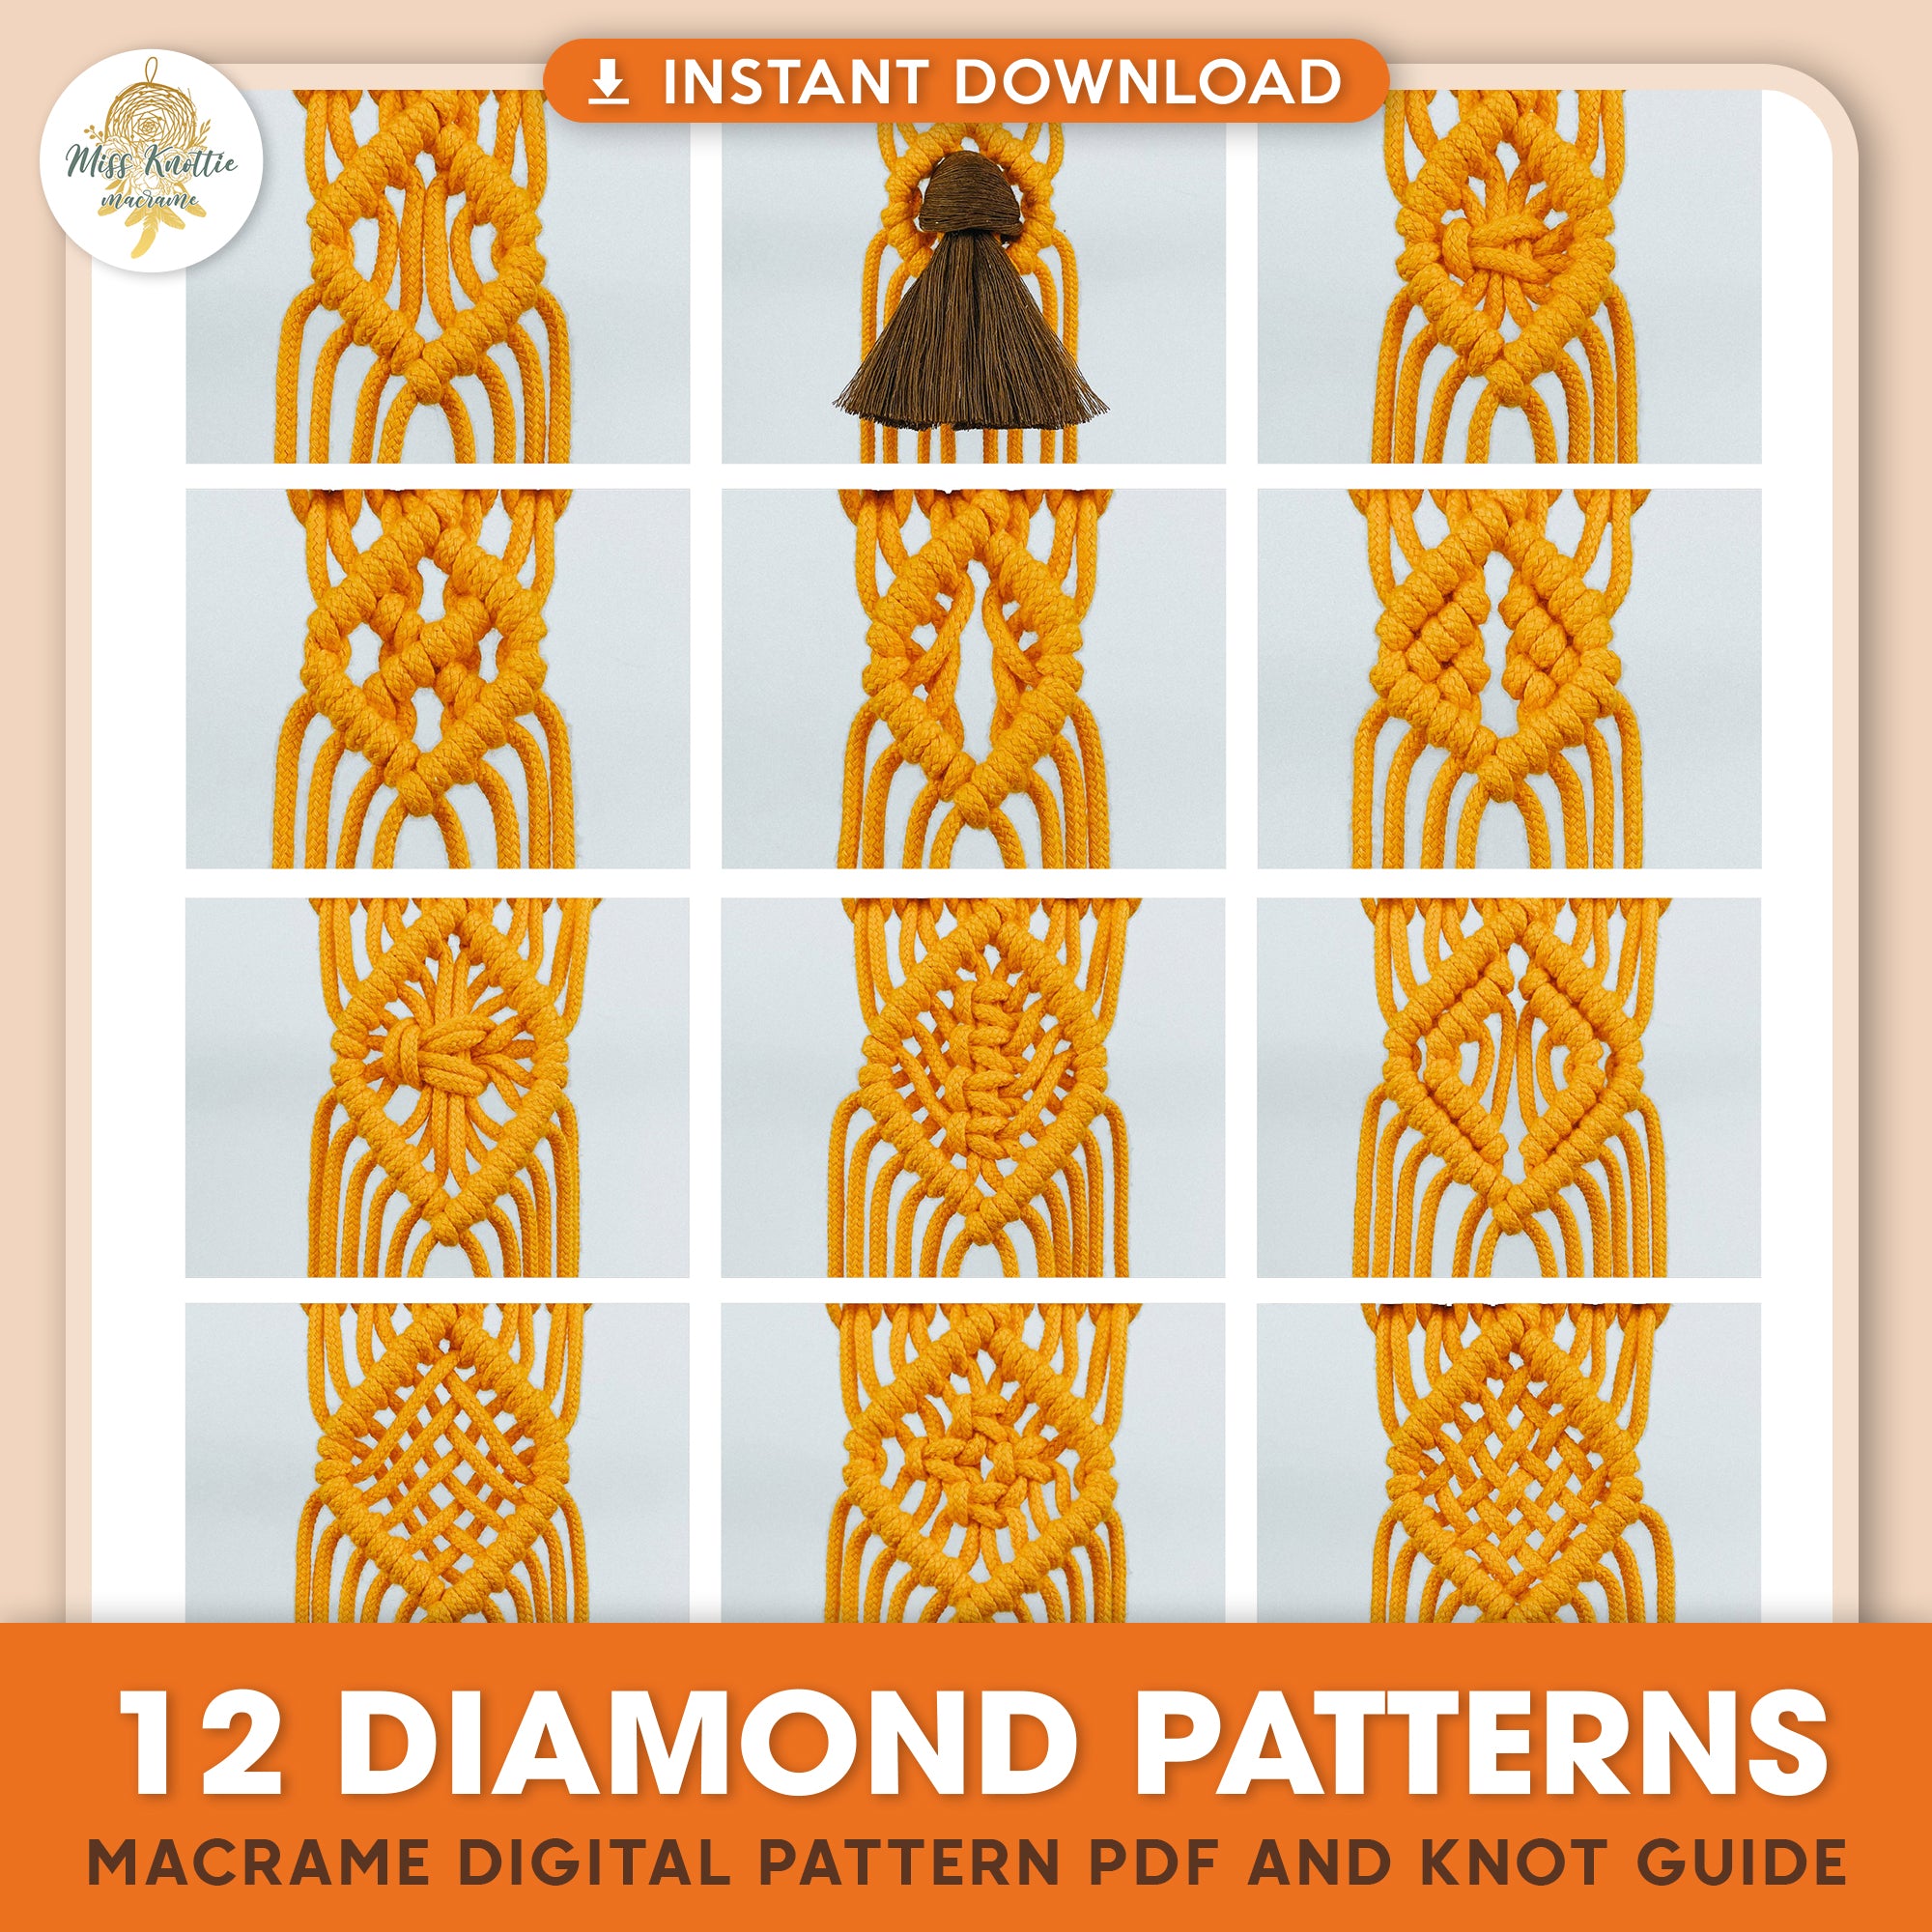 12 Macrame Diamond Patterns - Digital PDF and Knot Guide